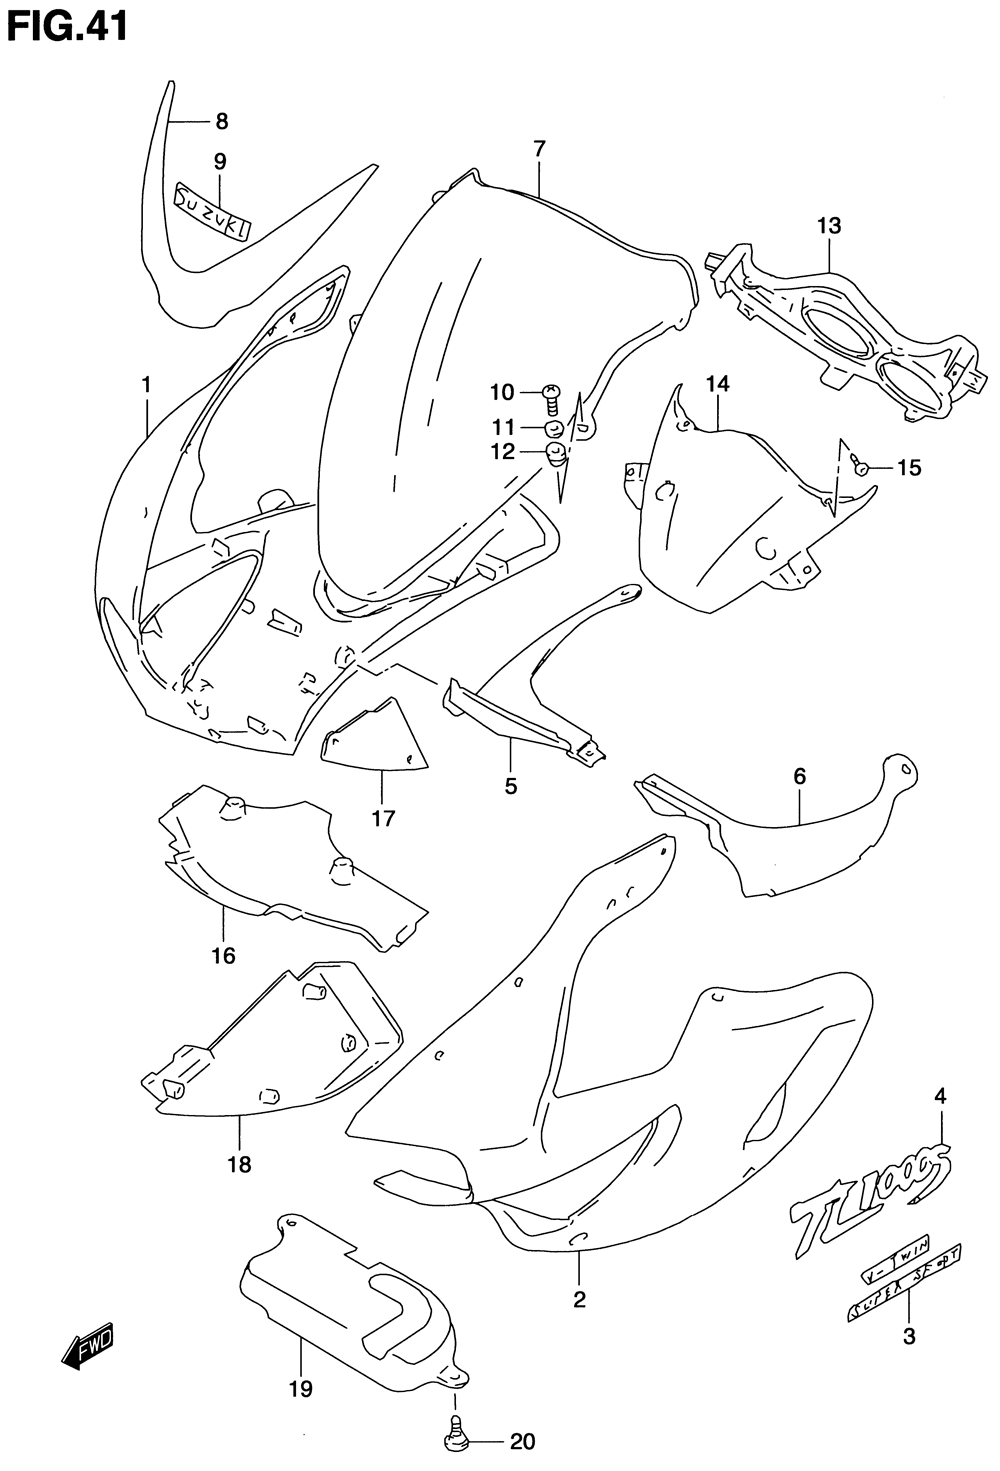 Cowling body (model v)